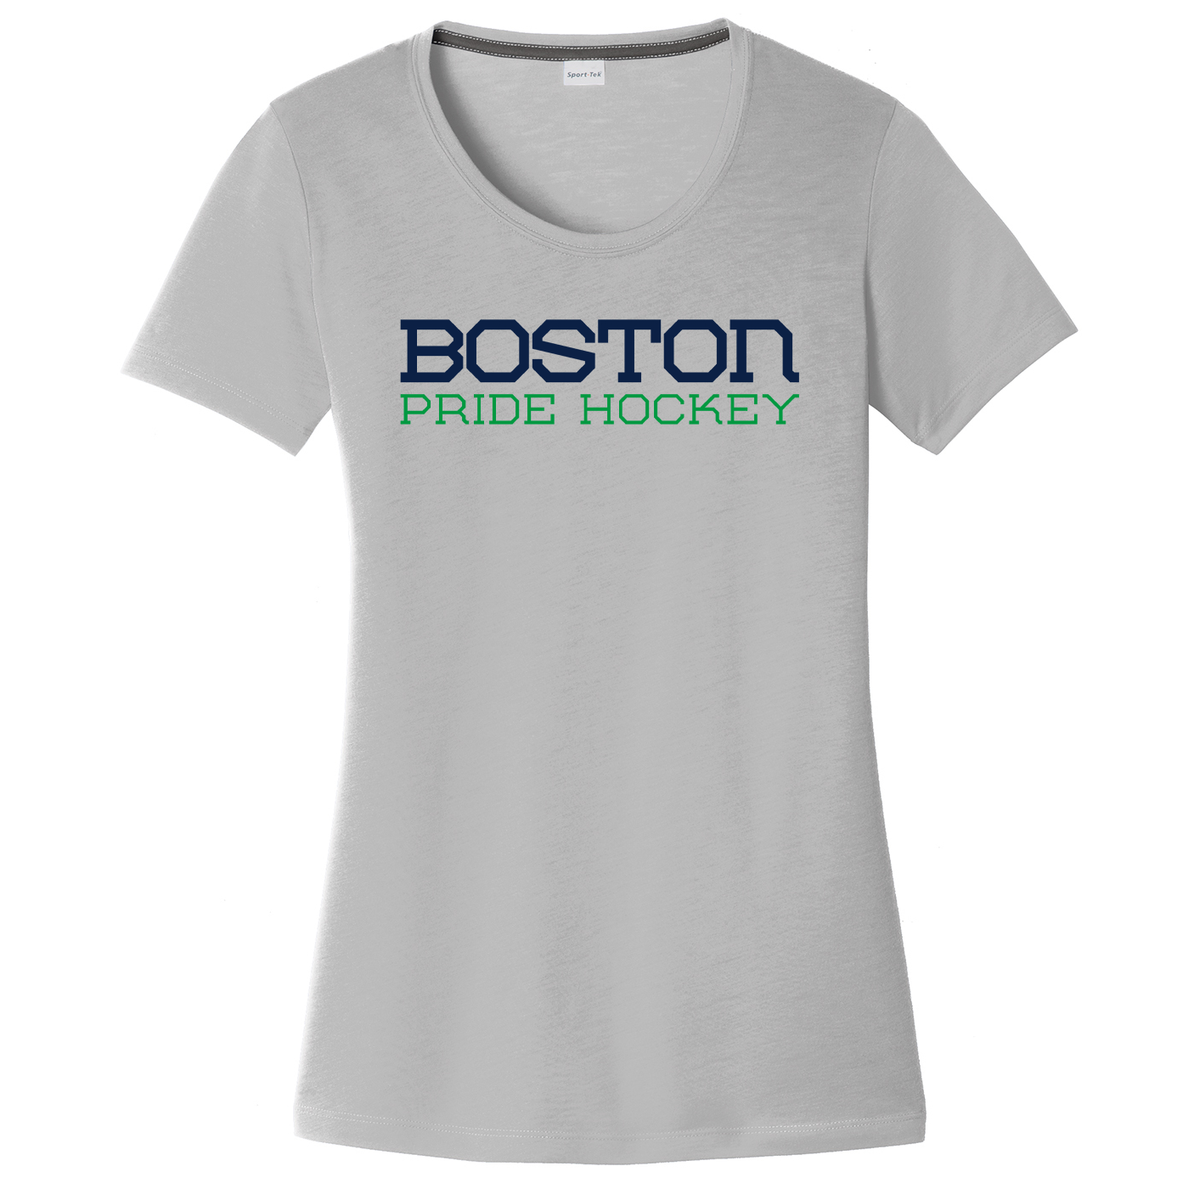 Boston Pride Hockey Women's CottonTouch Performance T-Shirt